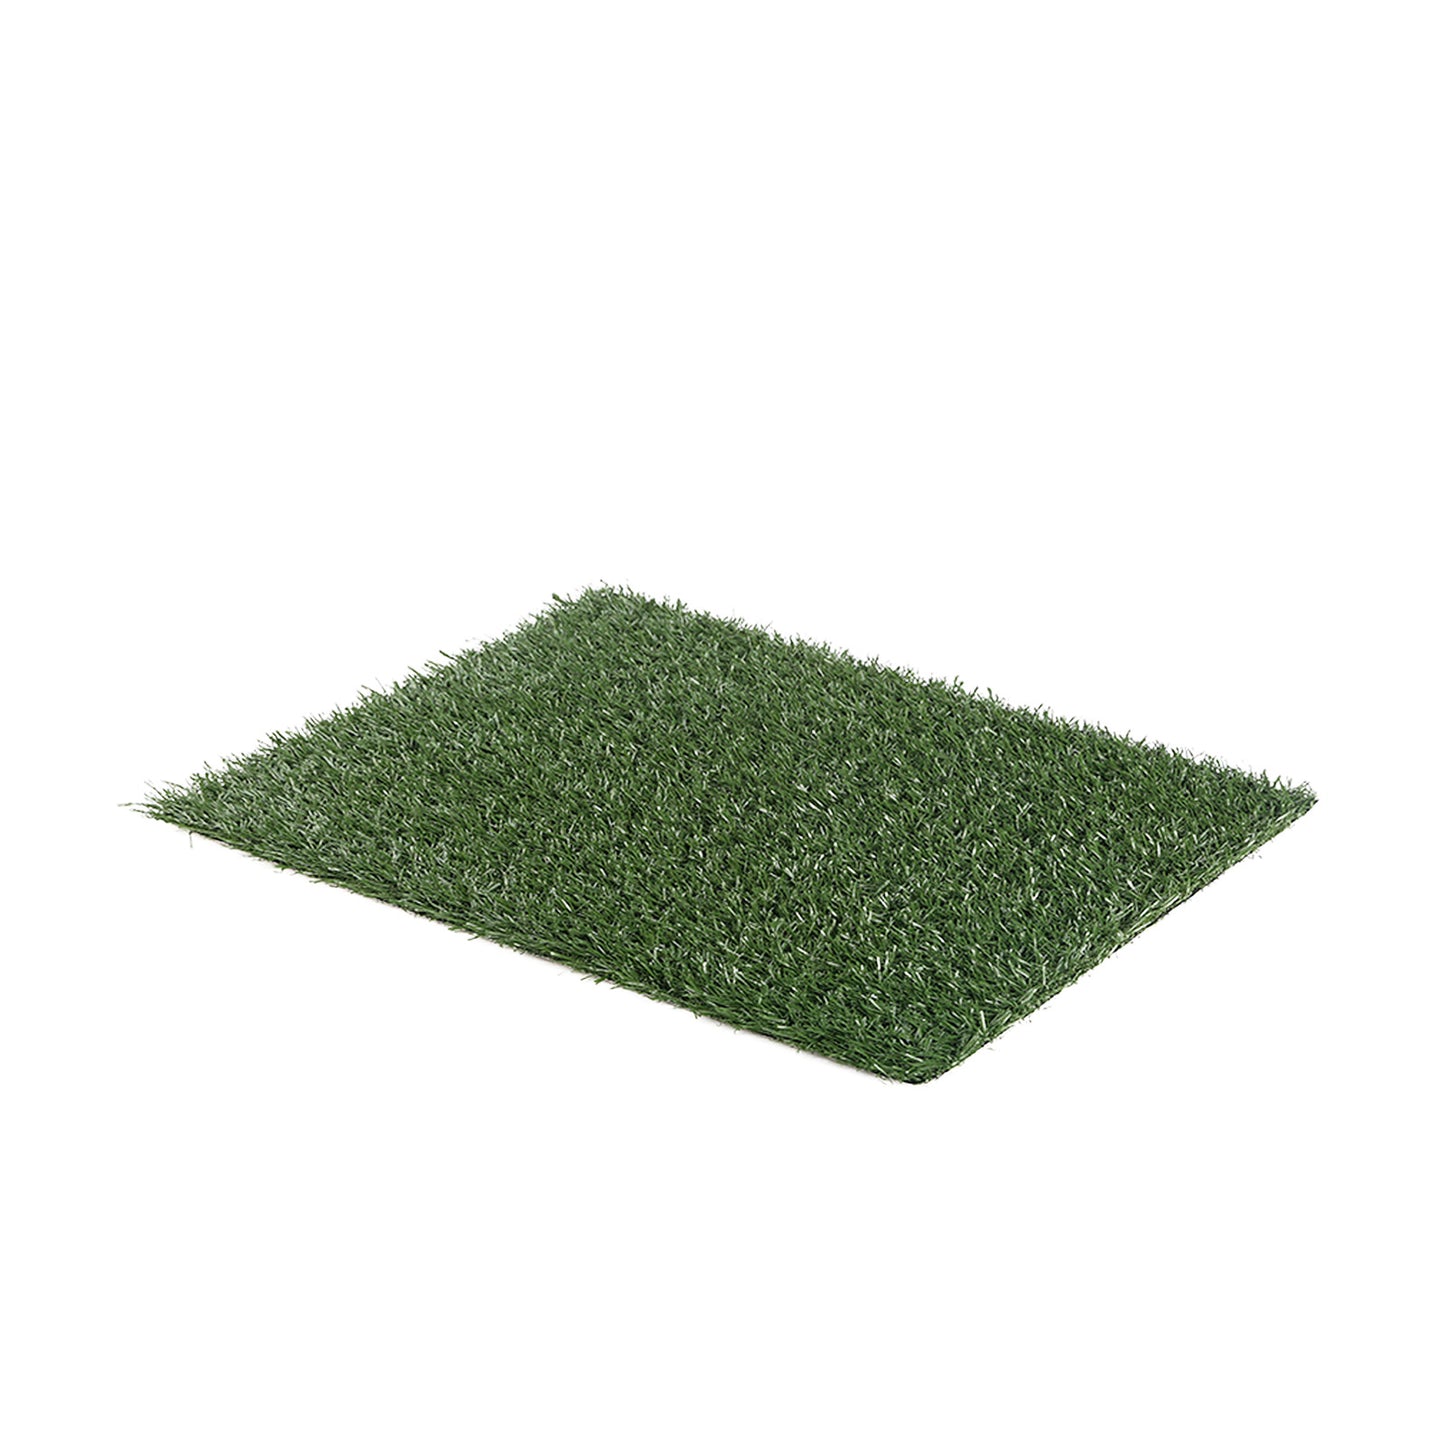 1 Grass Mat for Pet Dog Potty Tray Training Toilet 63.5cm x 38cm - image1